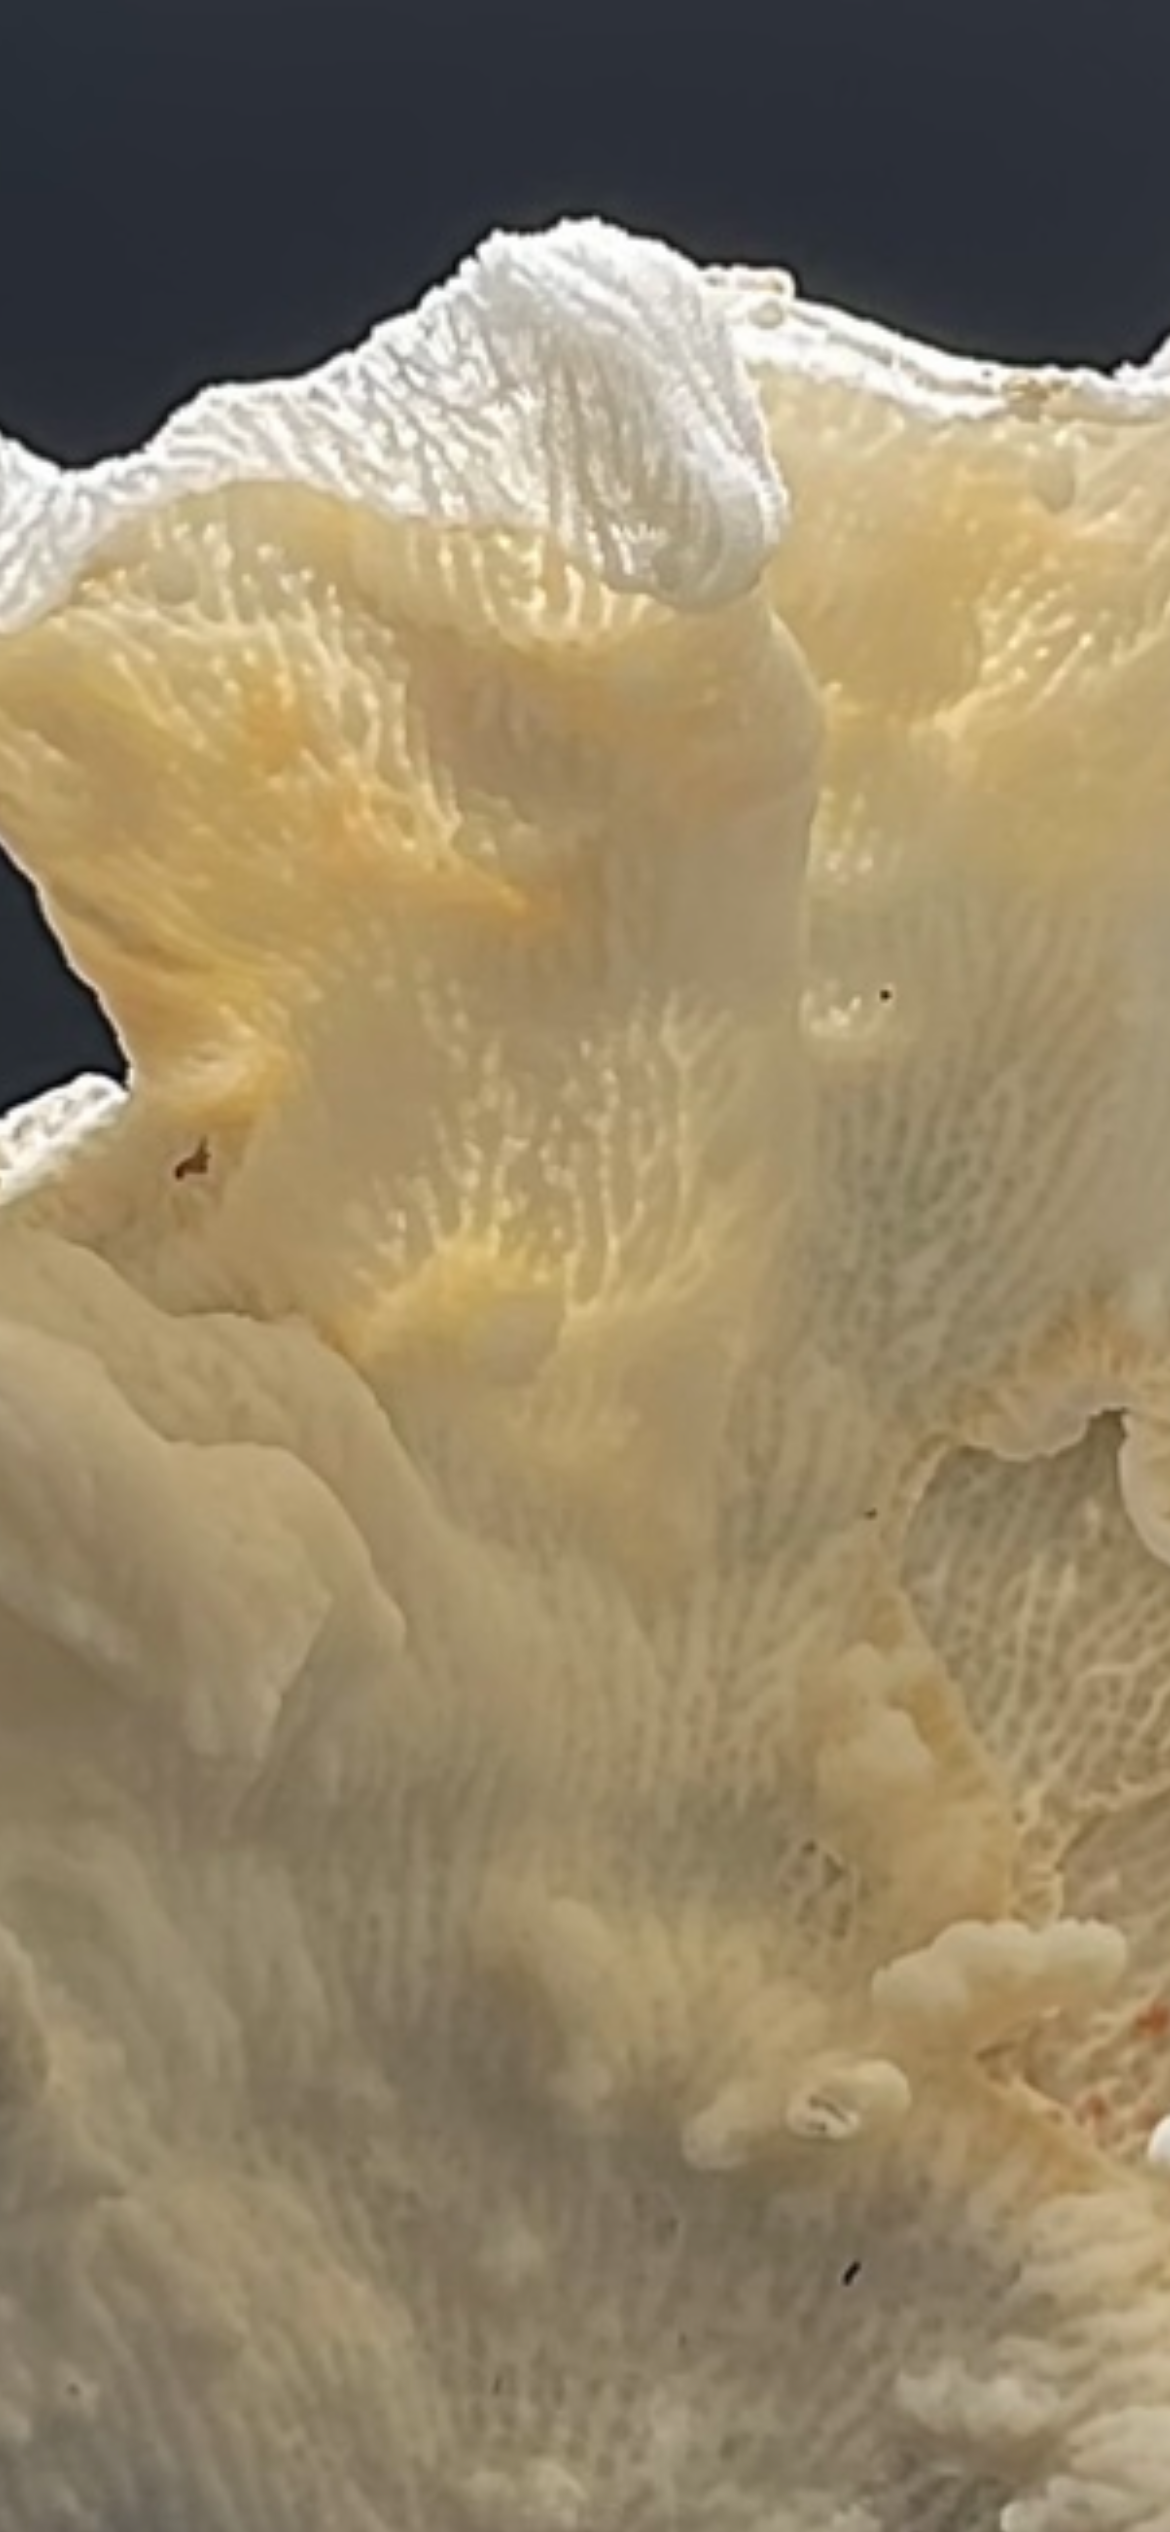 Merulina Coral (11”x10”) - Treasures from Beneath